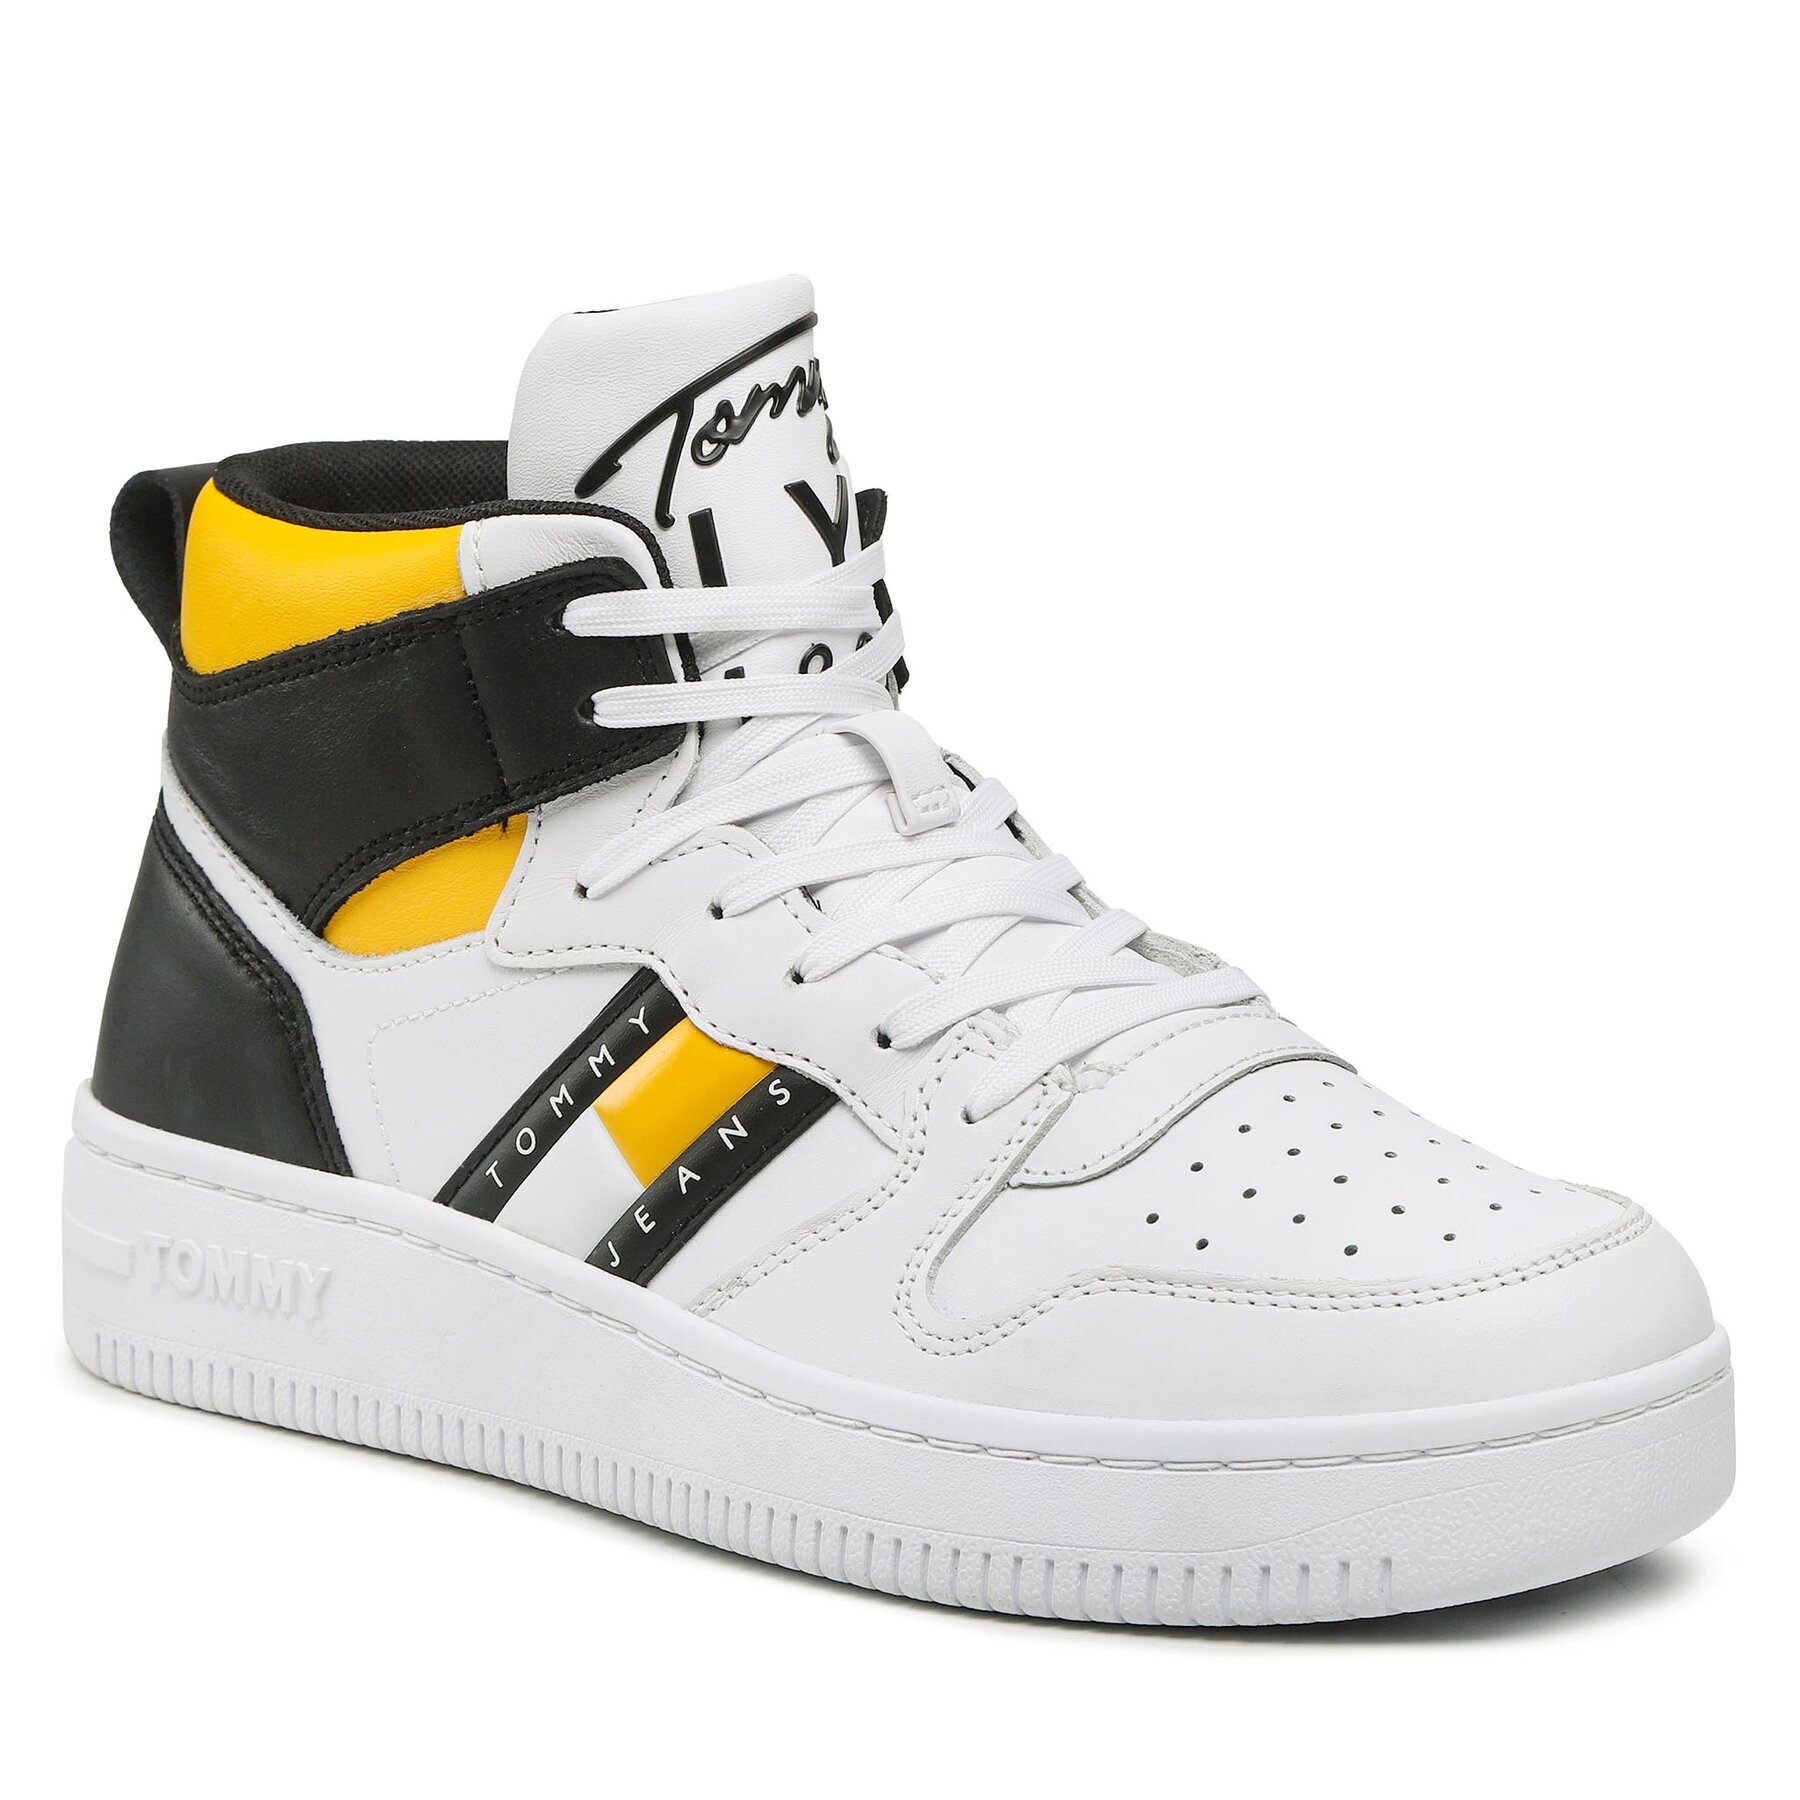 Sneakers Tommy Jeans Retro Basket Mid Cut EM0EM01142 White YBR Basket imagine super redus 2022